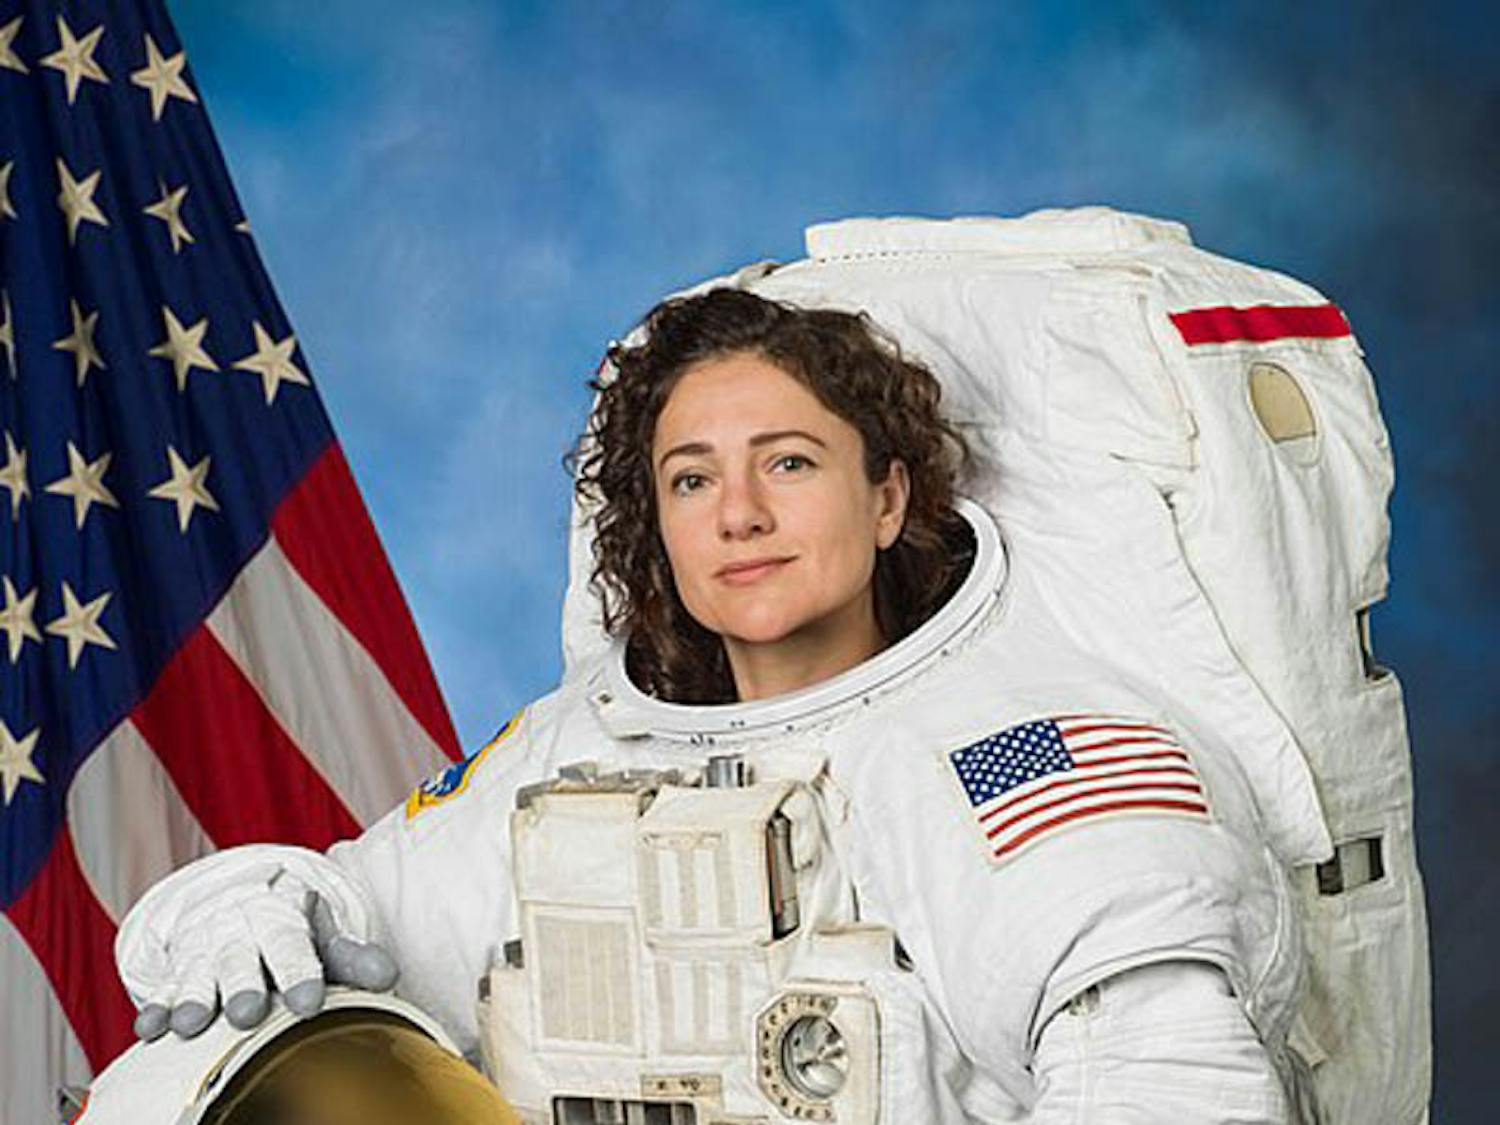 Ryan_Jessica-Meir_CO_NASA